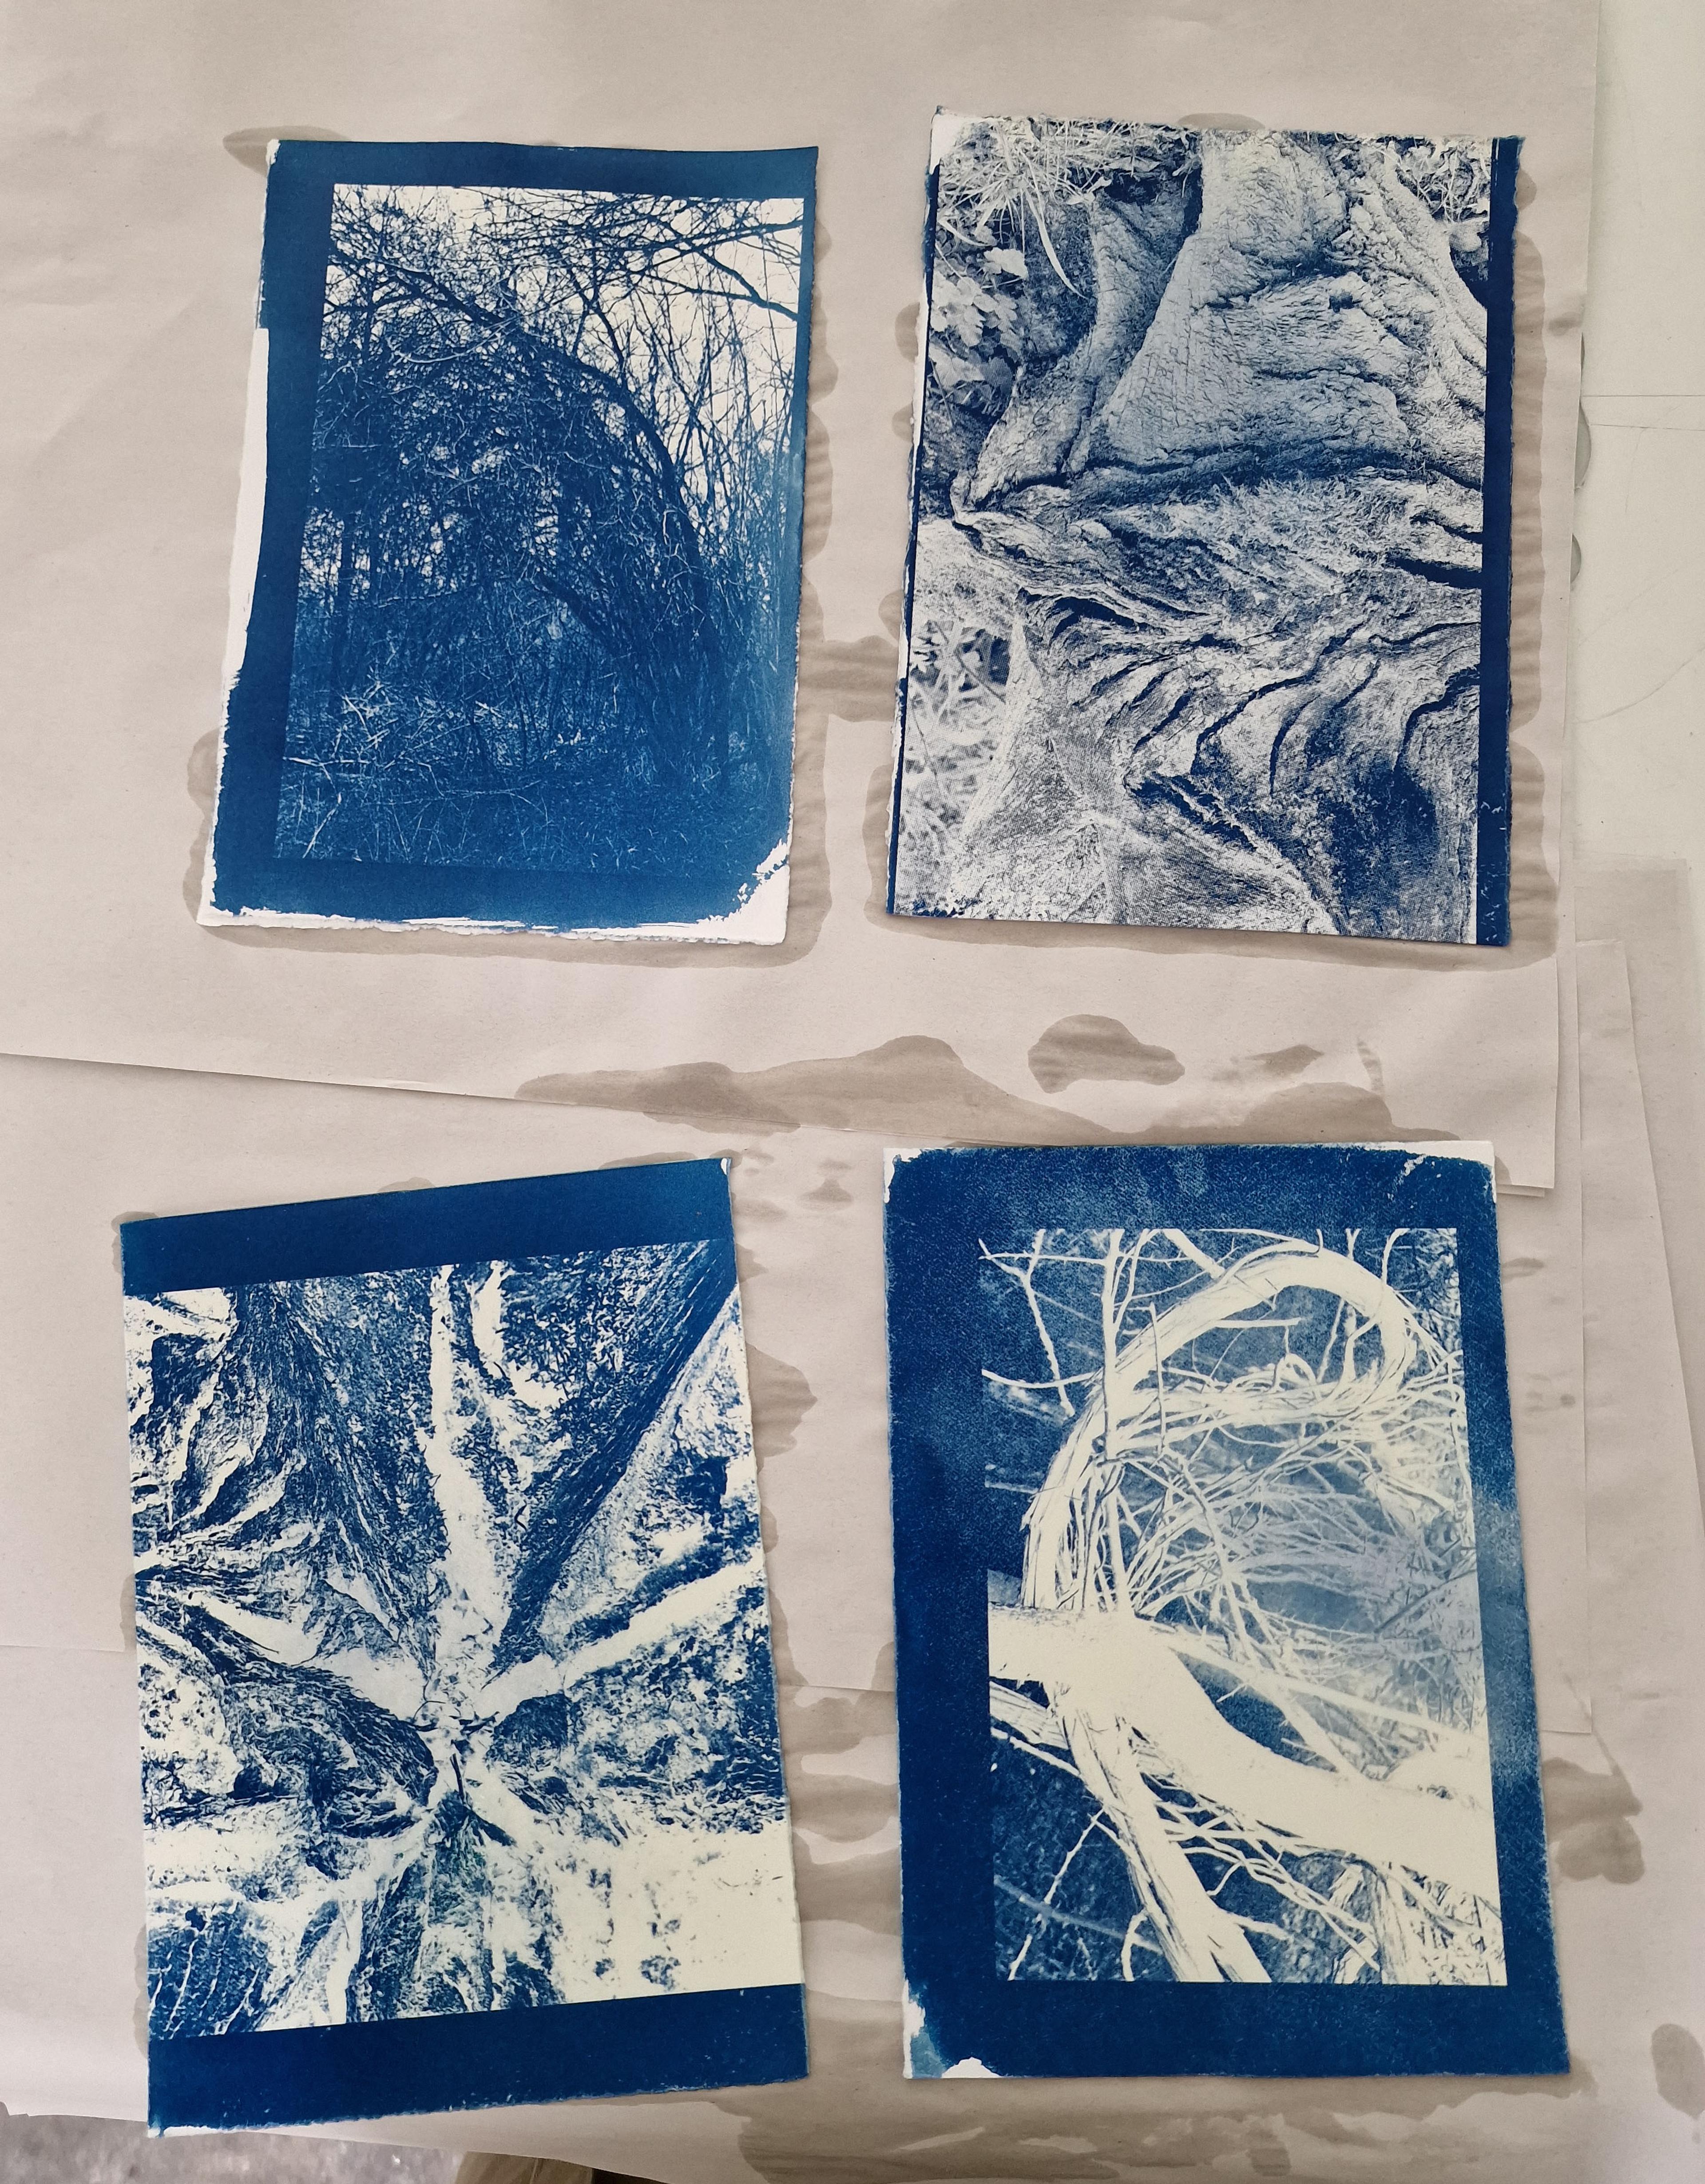 4 examples of blue cyanotype prints